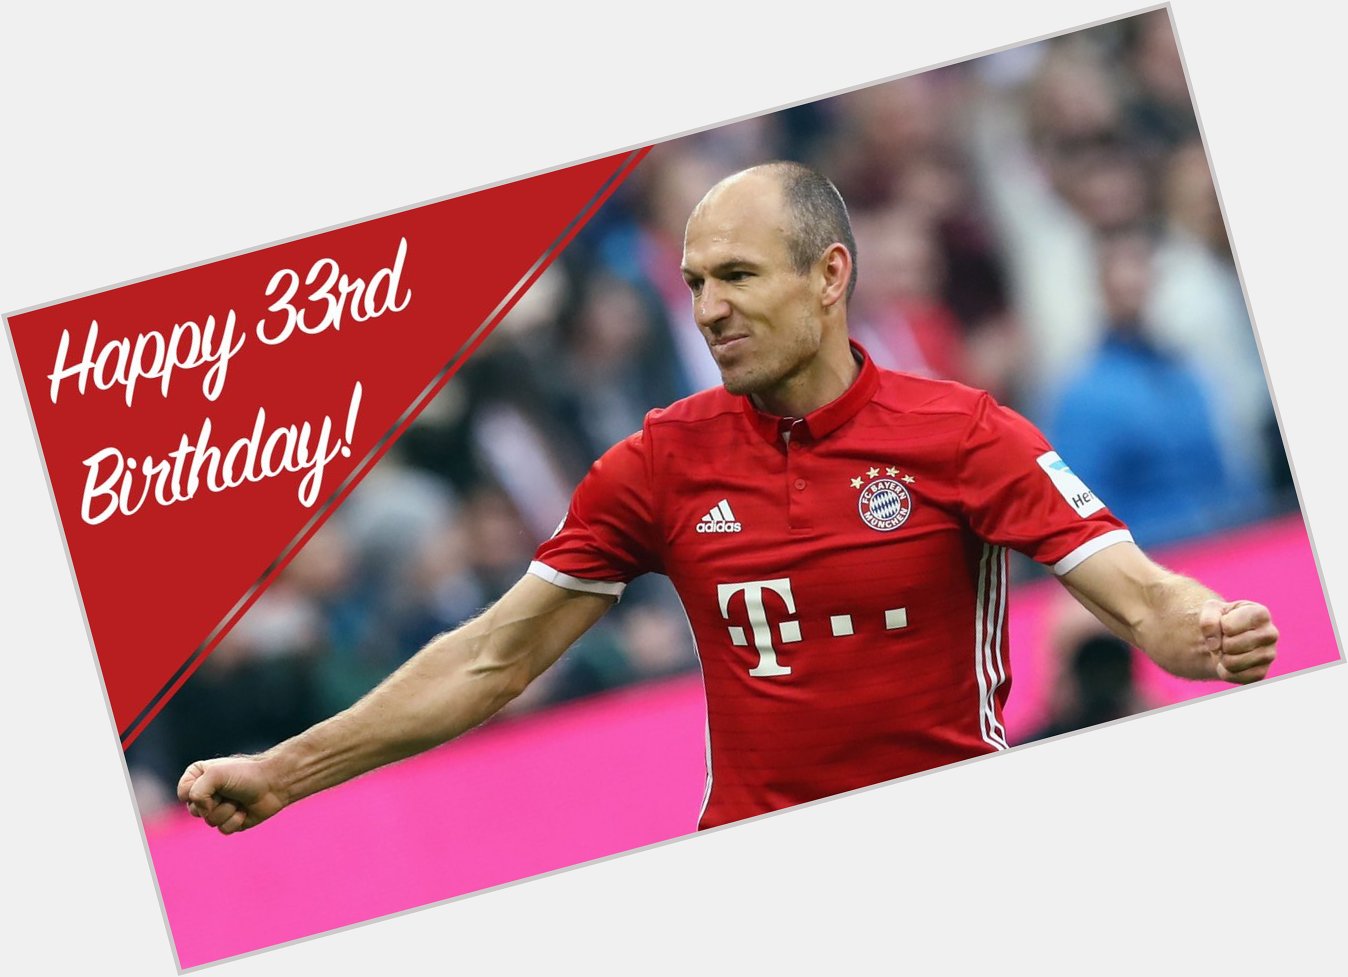 Happy birthday to Bayern Munich\s \"Mr. Wembley,\" Arjen Robben! 